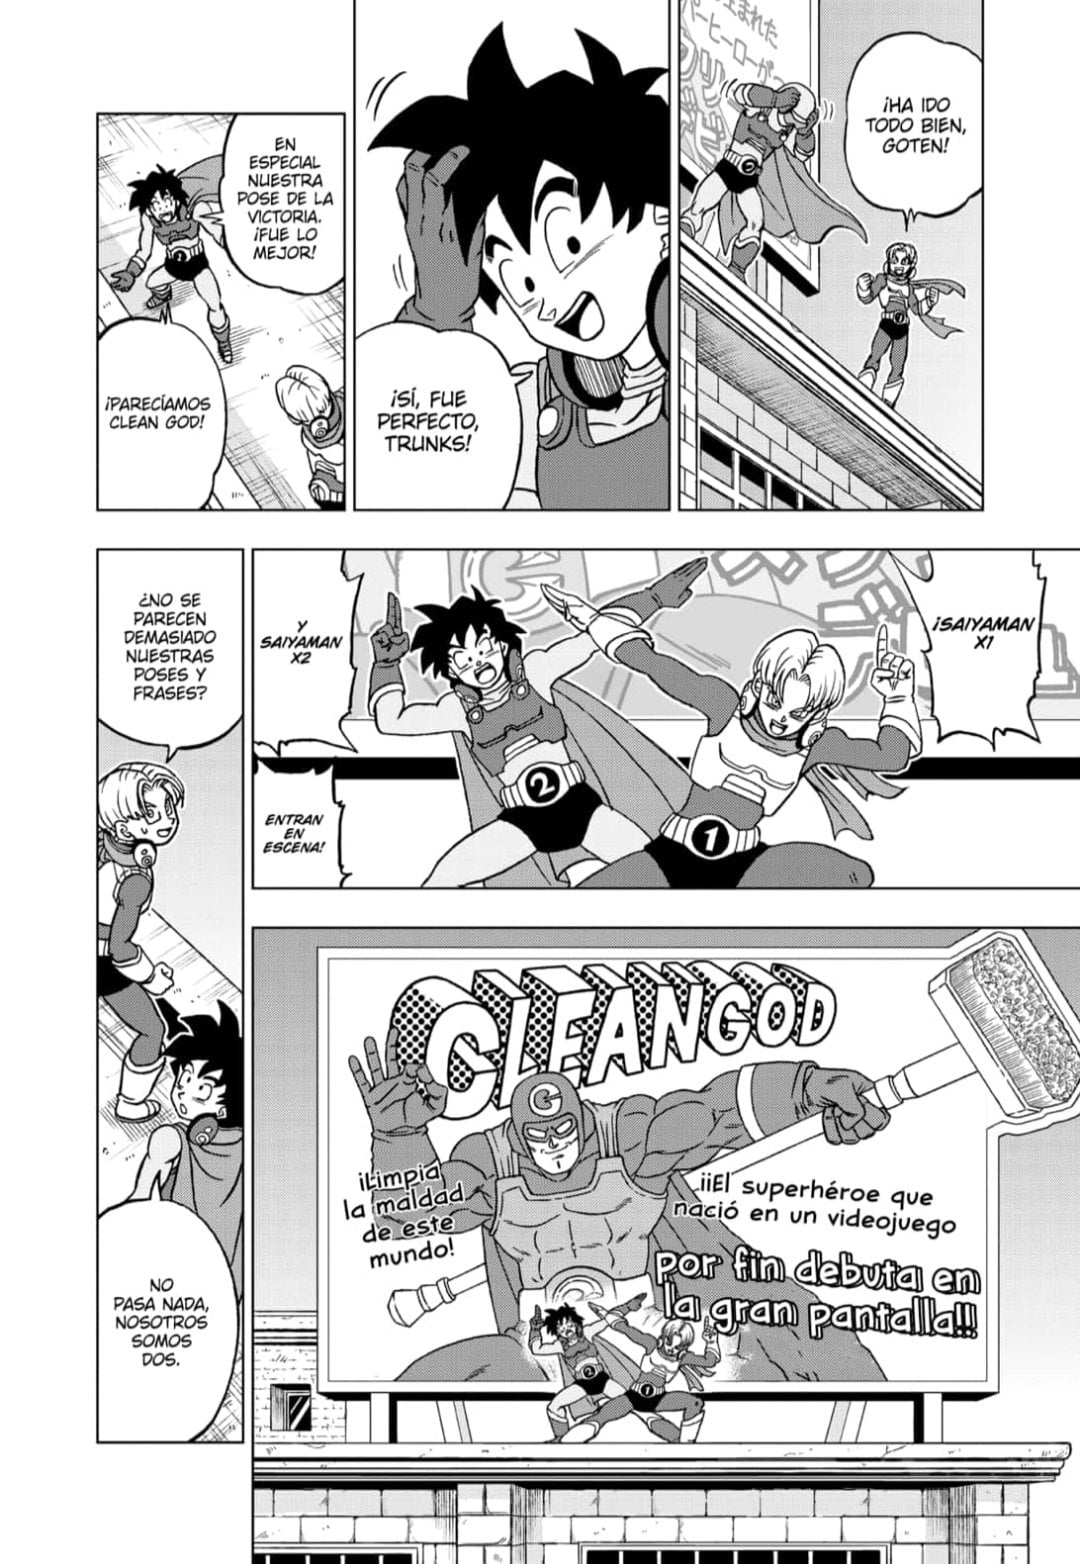 Ver Dragon Ball Super Manga 88 Español Completo Online